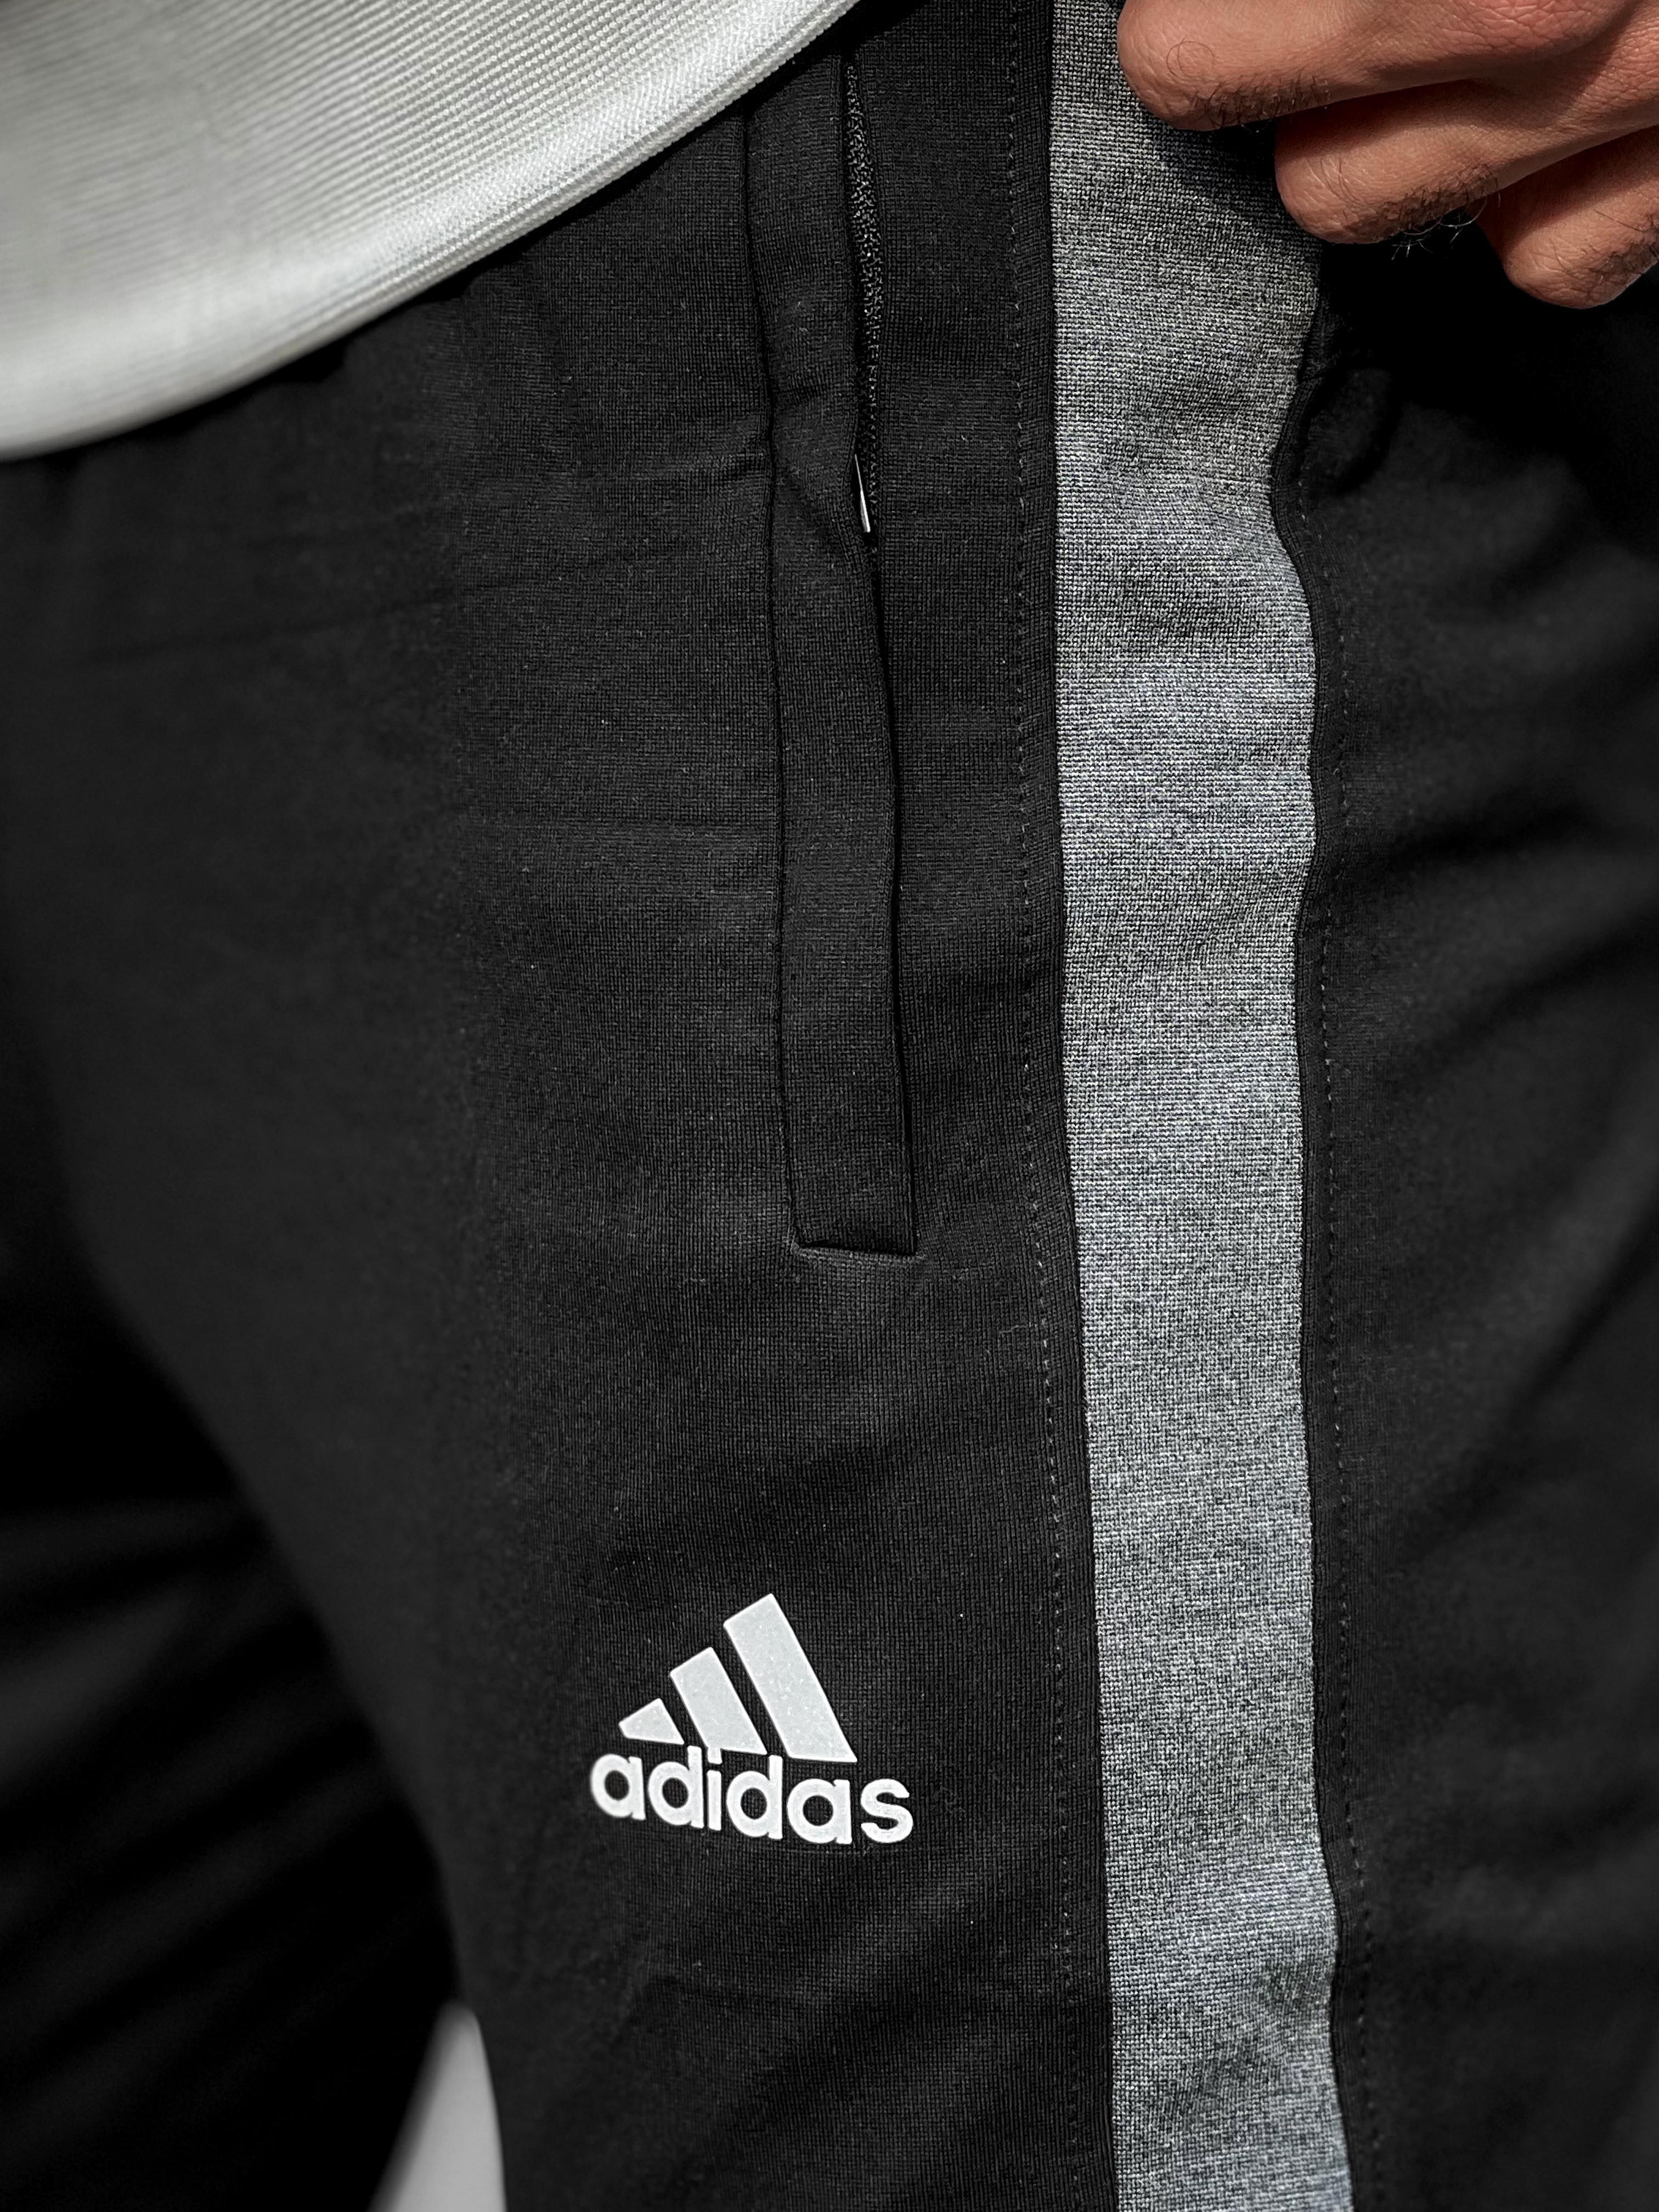 Adds Reflector Logo Sports Trouser in Black